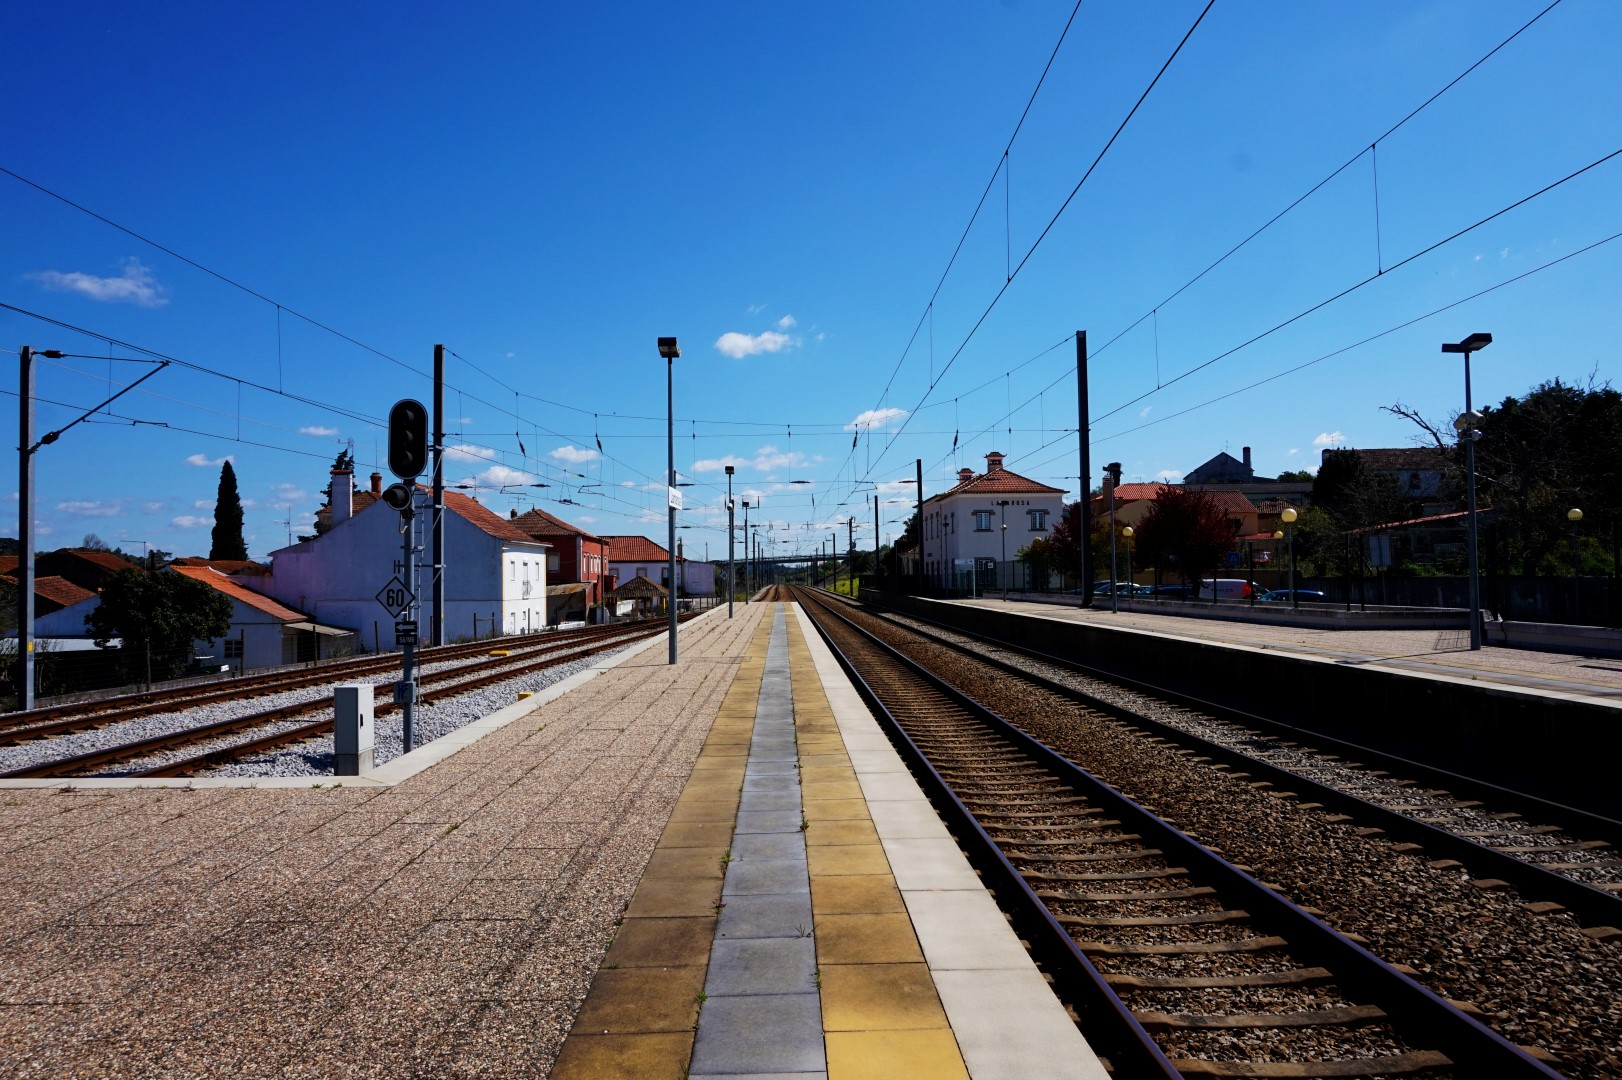 Railtrip au Portugal - De Coimbra à Tomar